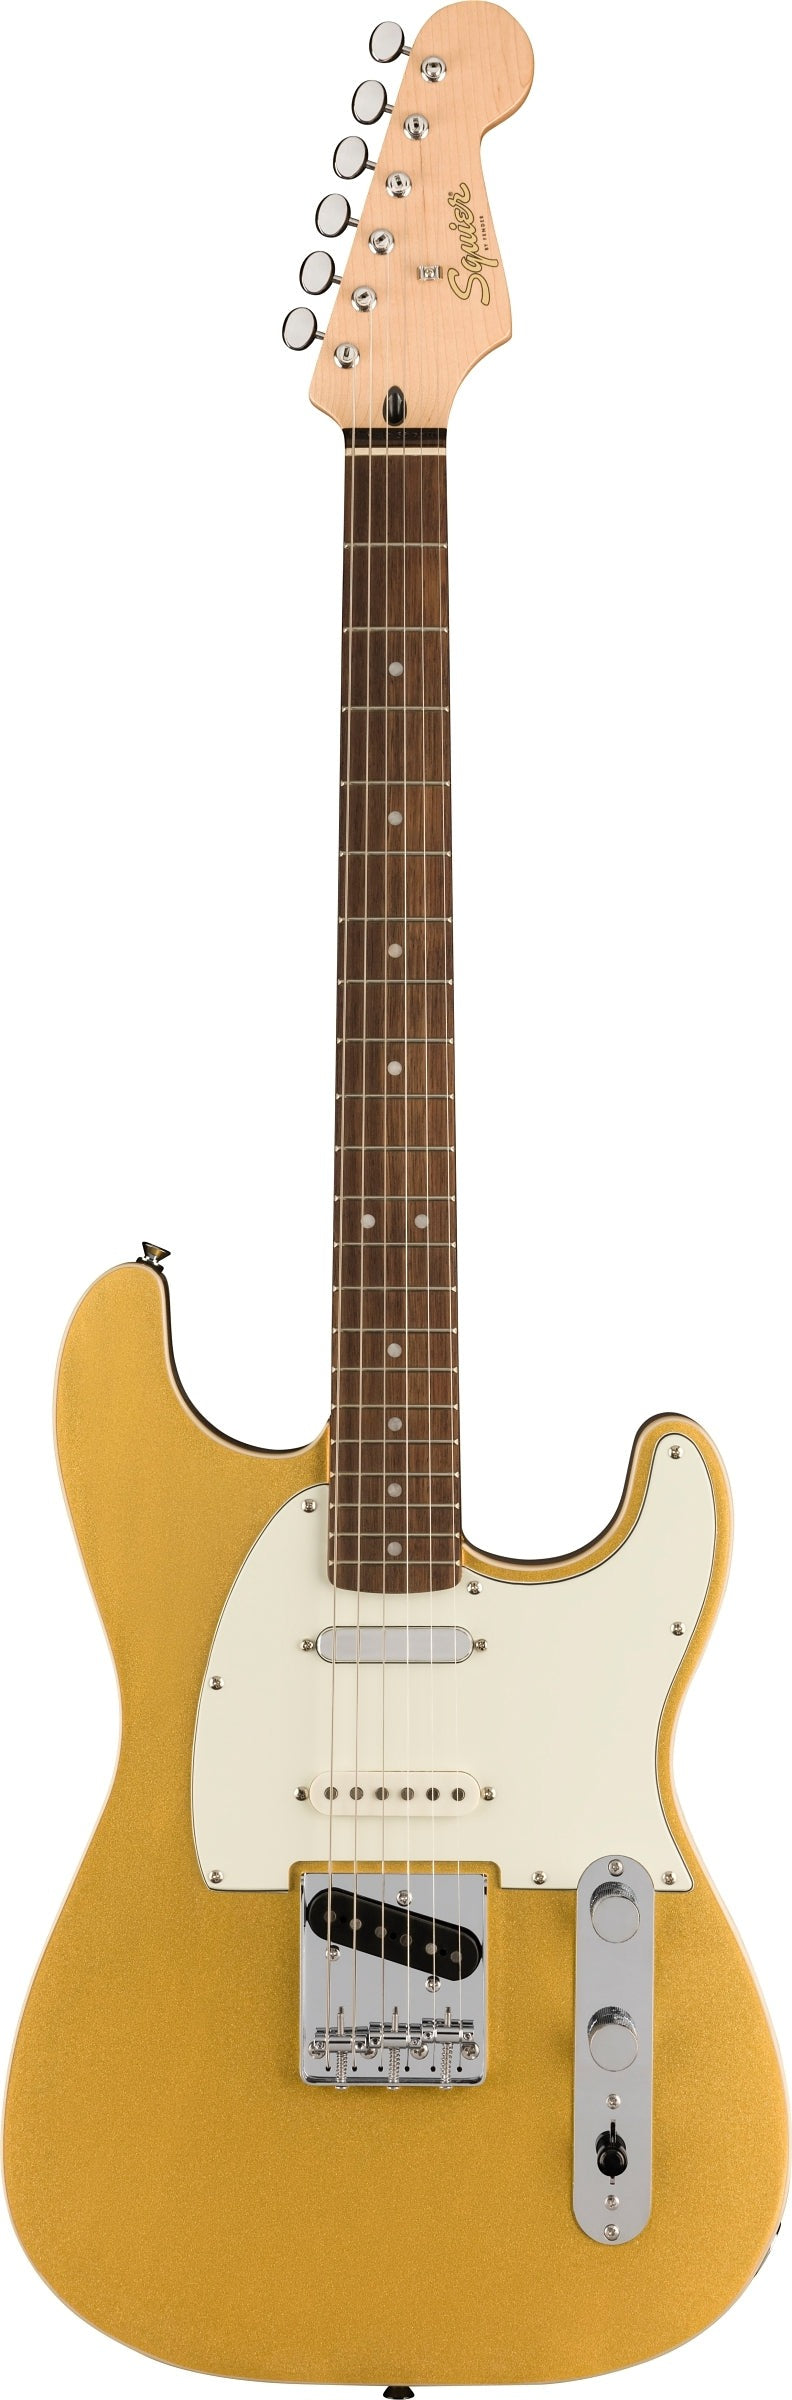 Squier Paranormal Custom Nashville Stratocaster Solidbody Electric Guitar - Aztec Gold